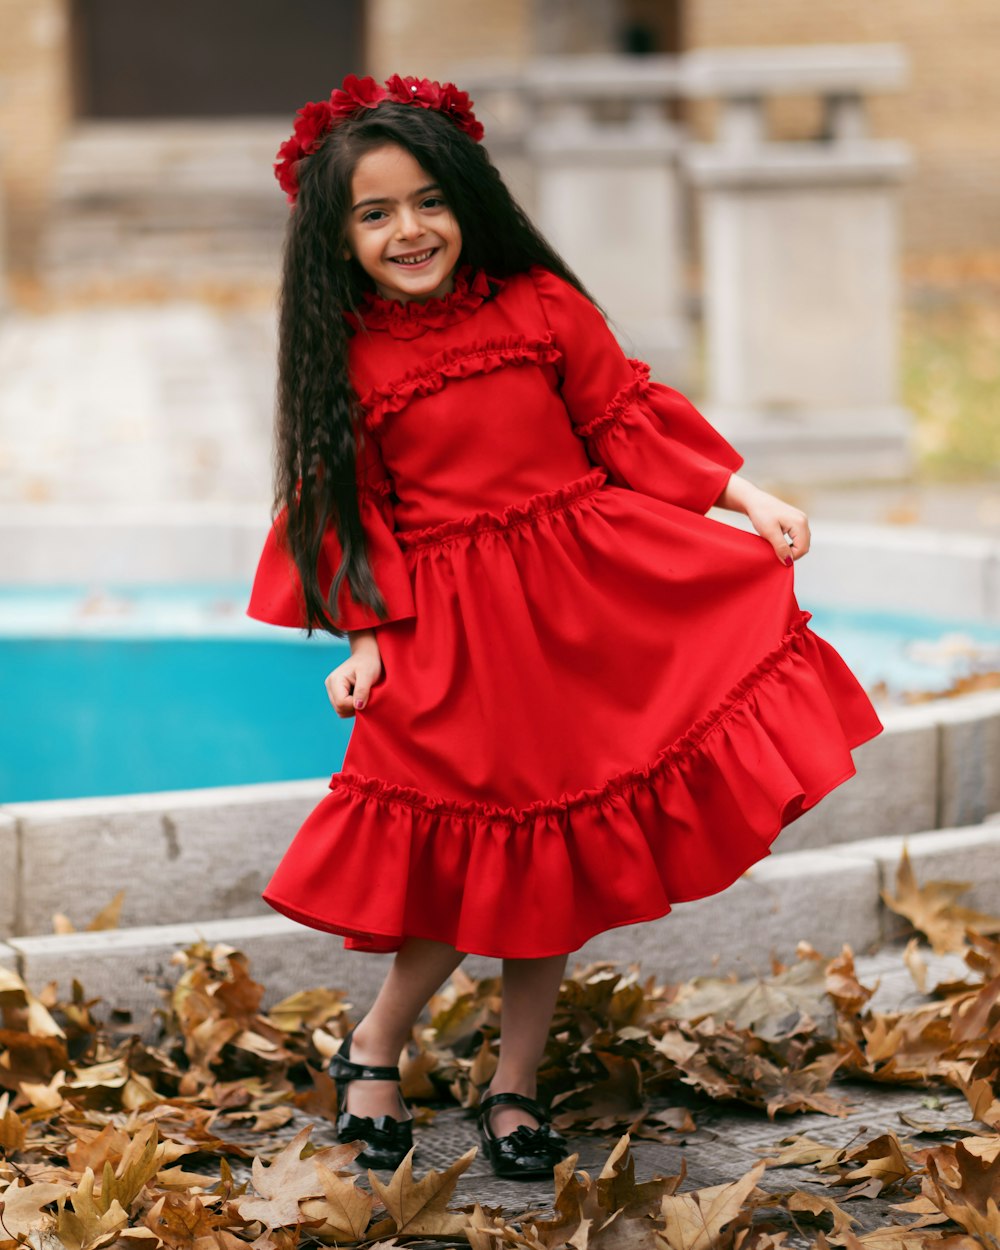 Kids Dress Pictures | Download Free Images on Unsplash